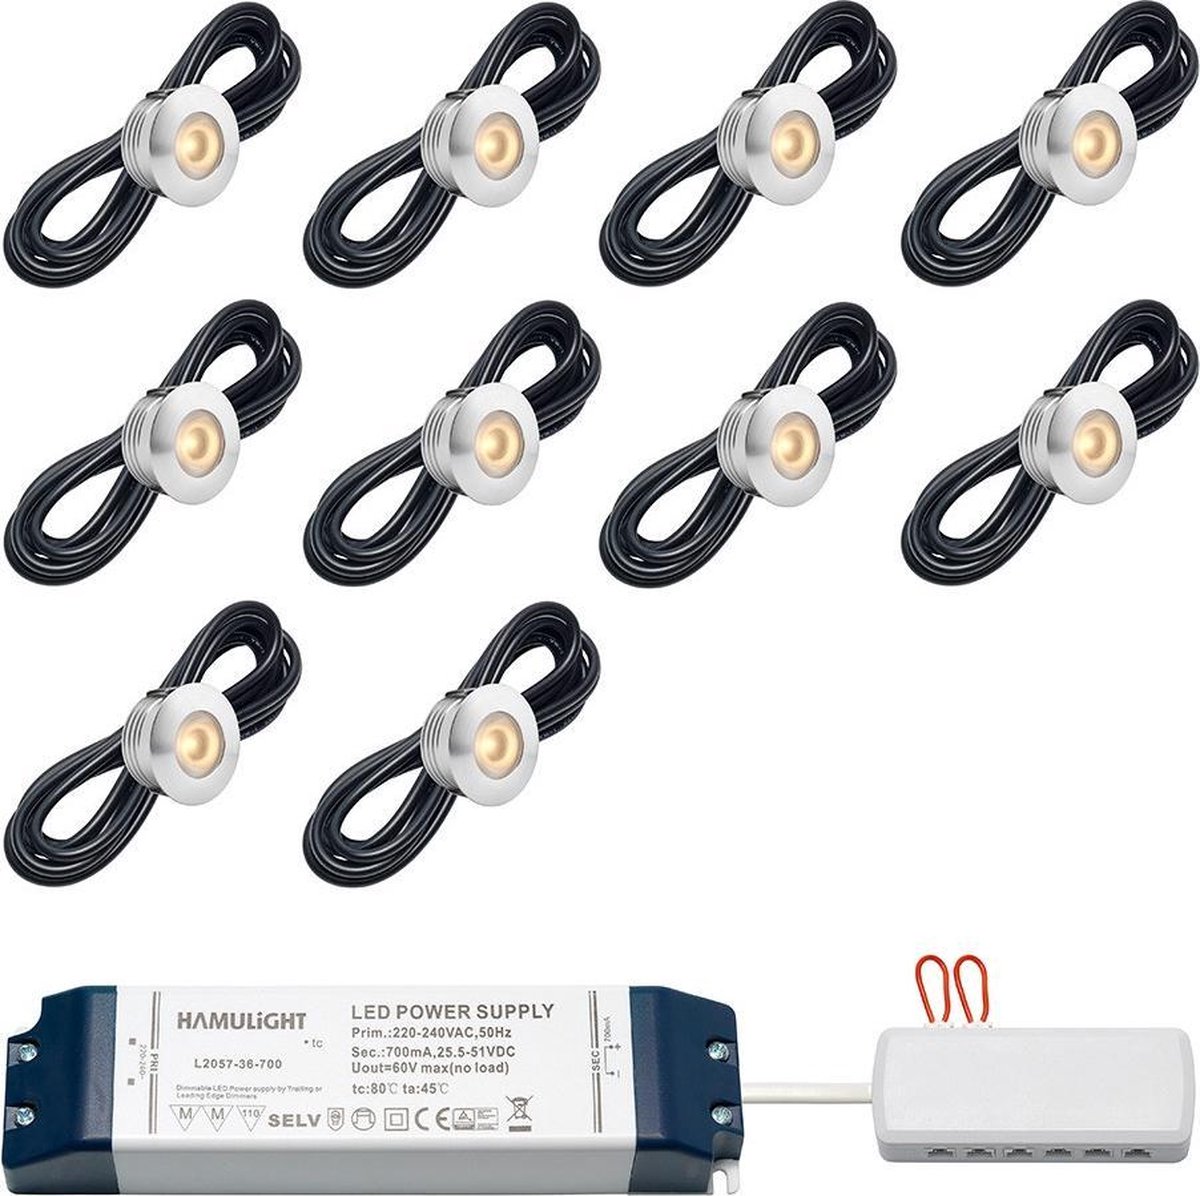 LED inbouwspot Aragon bas inclusief trafo - inbouwspots / downlights / plafondspots / led spot / 3W / dimbaar / warm wit / rond / 230V / IP44 / - set van 10 stuks